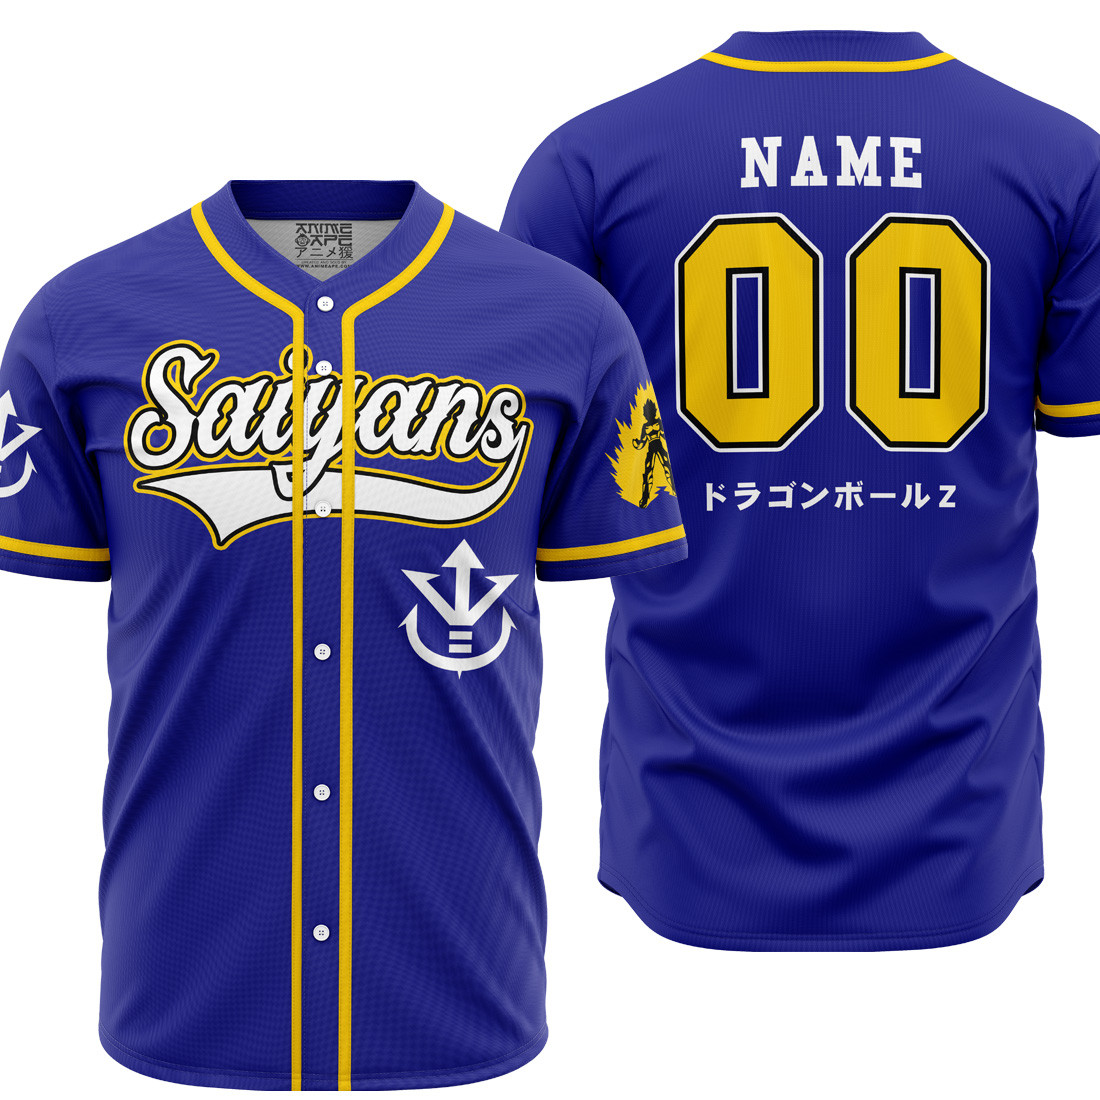 Personalized Saiyan Vegeta Dragon Ball Z Baseball Jersey, Unisex Jersey Shirt for Men Women